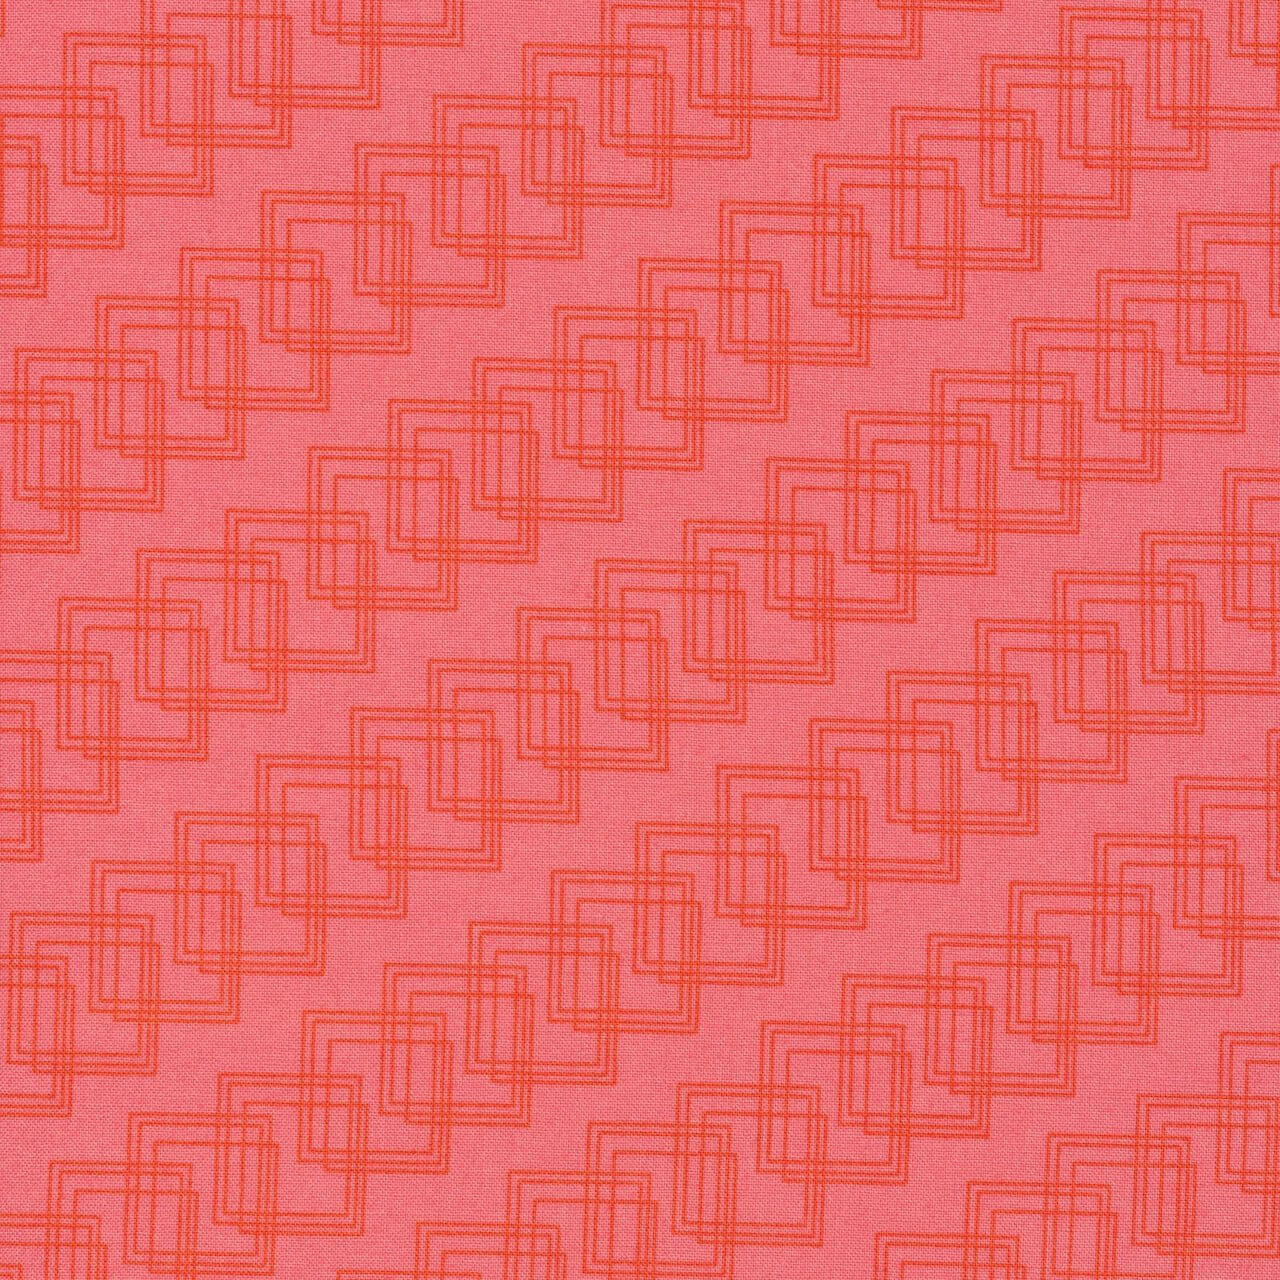 Close-up of Cloud9 Fabrics' Geo Cubes quilting fabric in orange, featuring geometric patterns.